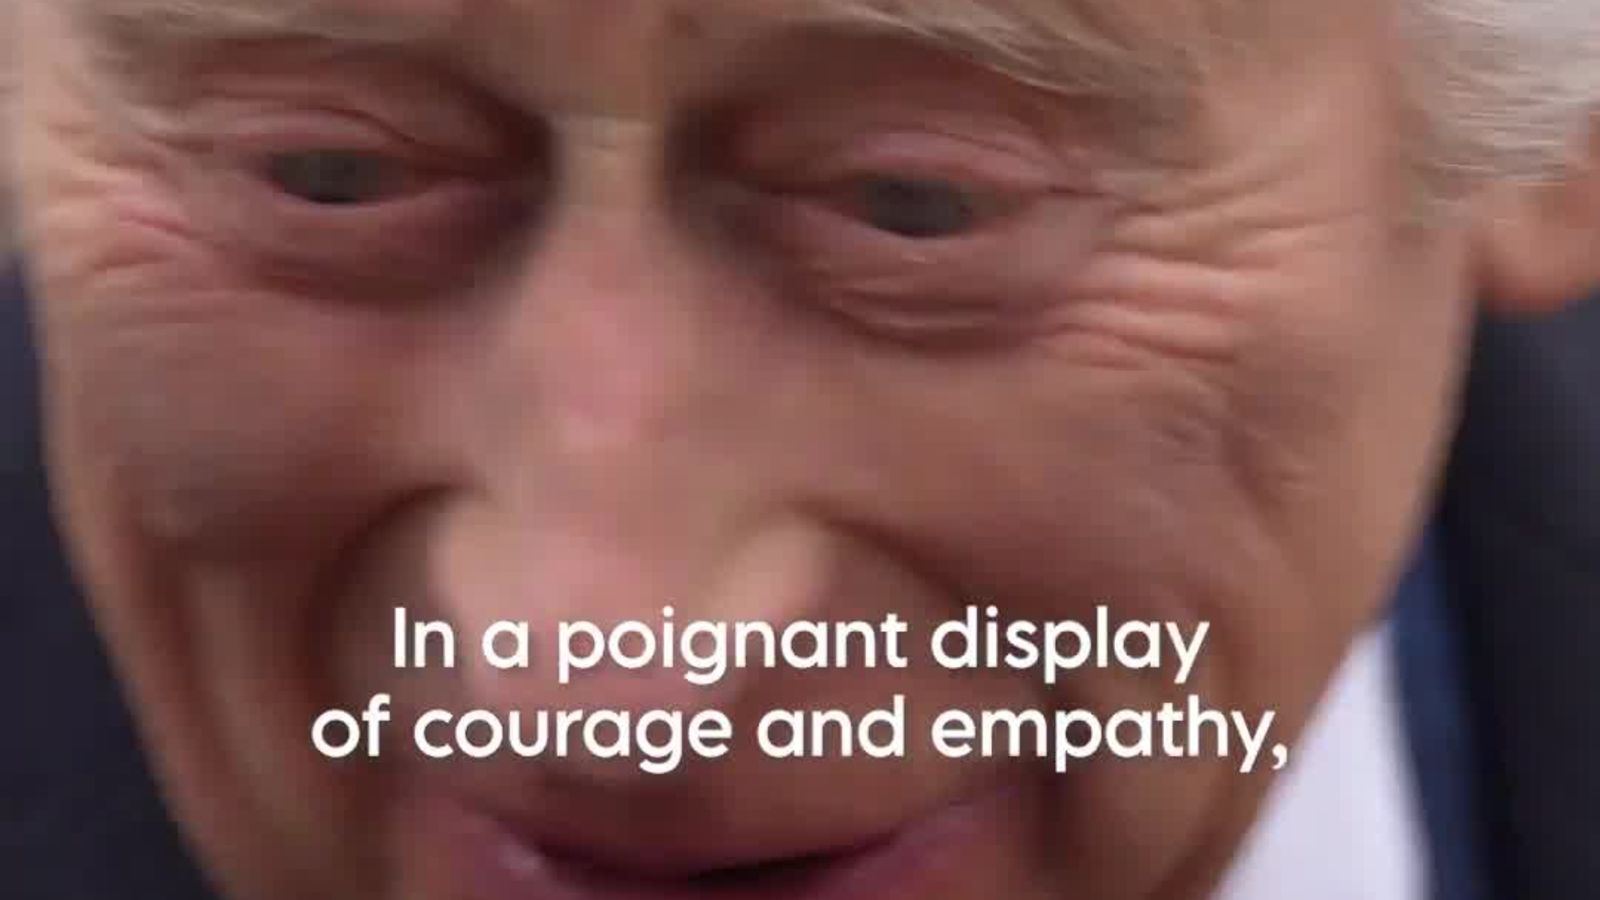 King Charles Returns to Royal Duties Following Cancer Diagnosis